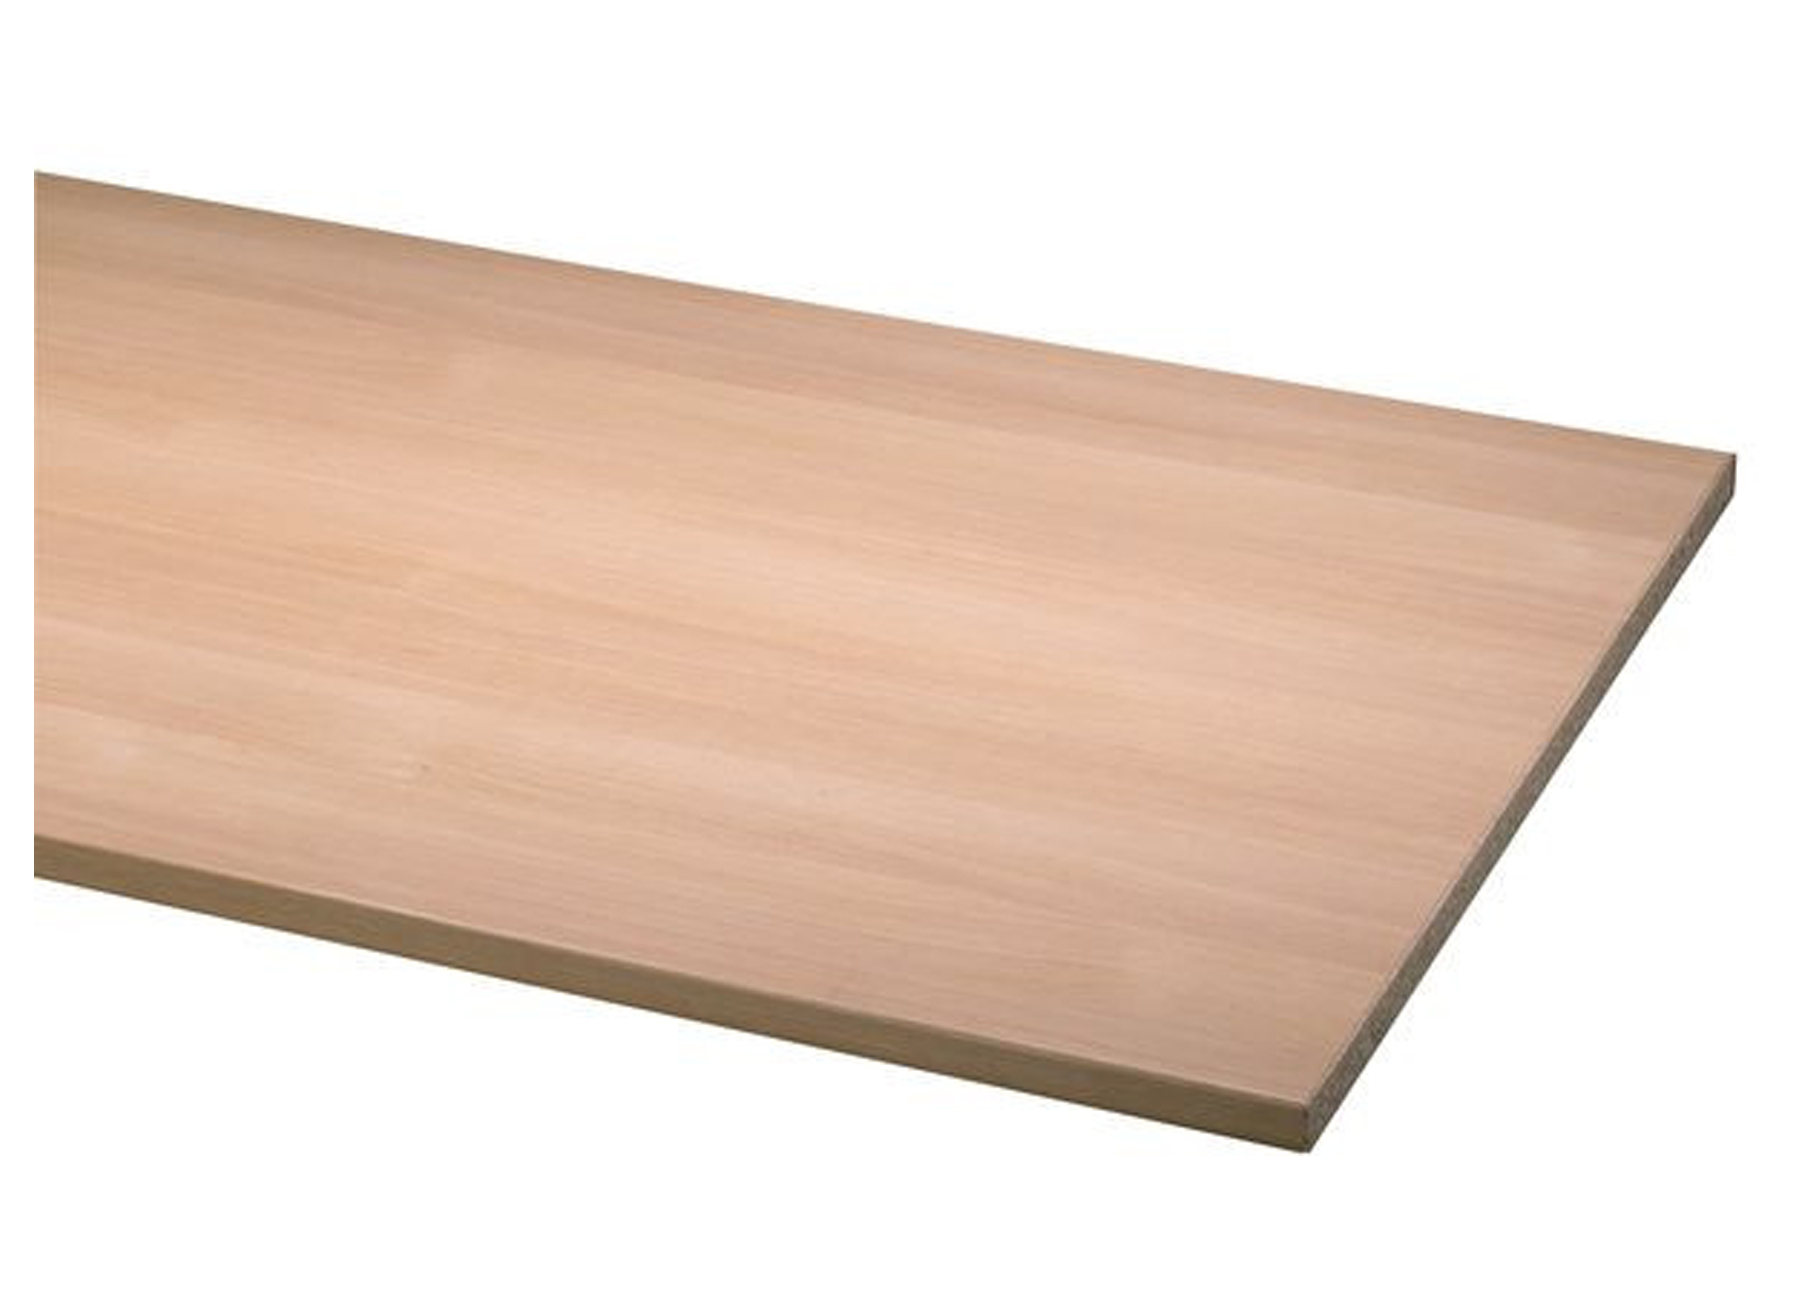 Cando Werkblad Eik Europees - hout en kunststof - panelen - meubelpanelen - keukenwerkbladen - cando werkblad 29mm eik europees